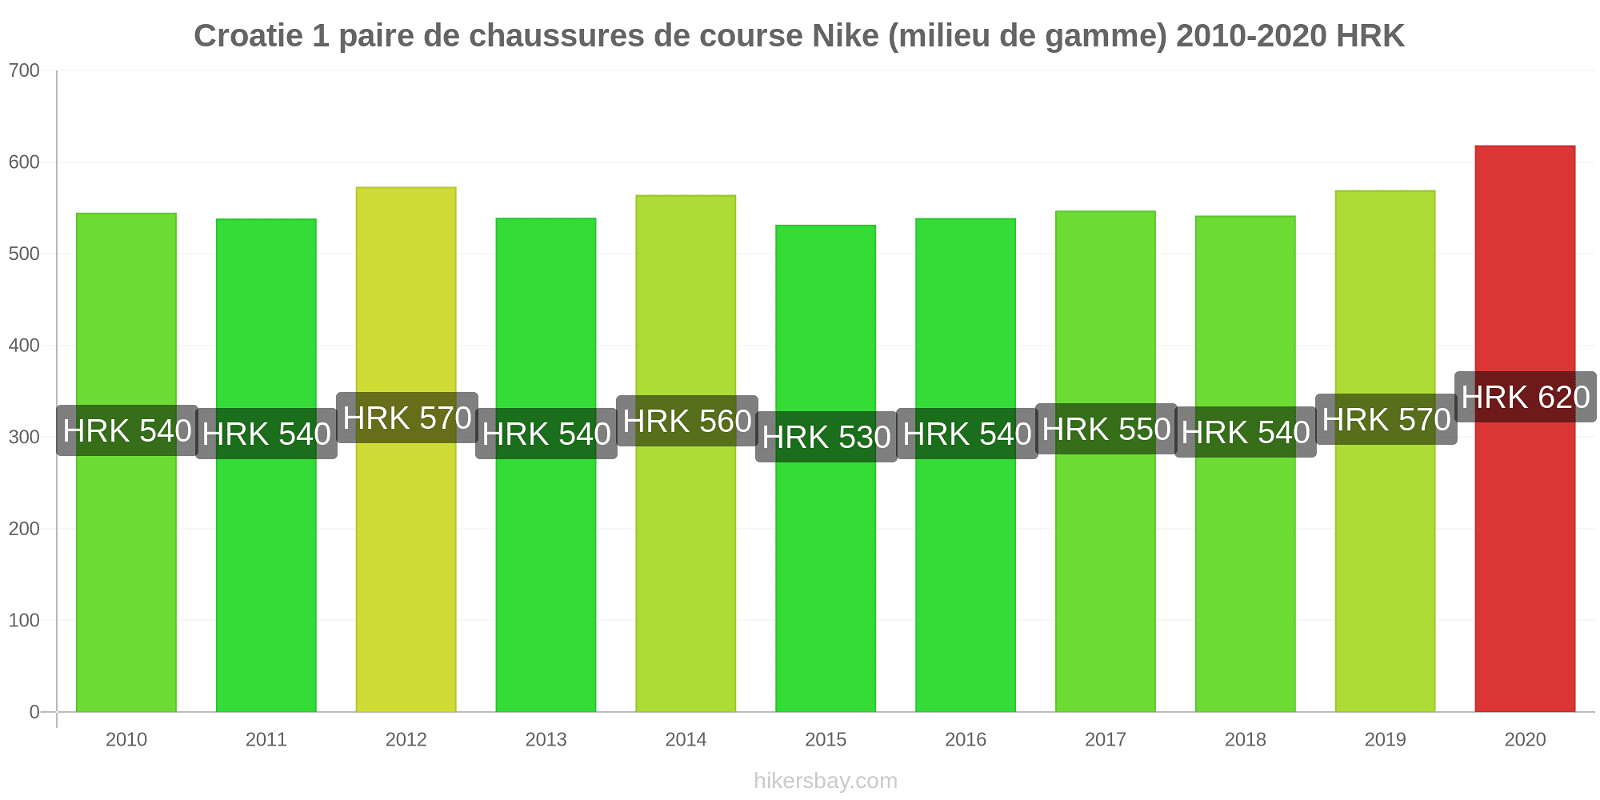 Croatie changements de prix 1 paire de chaussures de course Nike (milieu de gamme) hikersbay.com